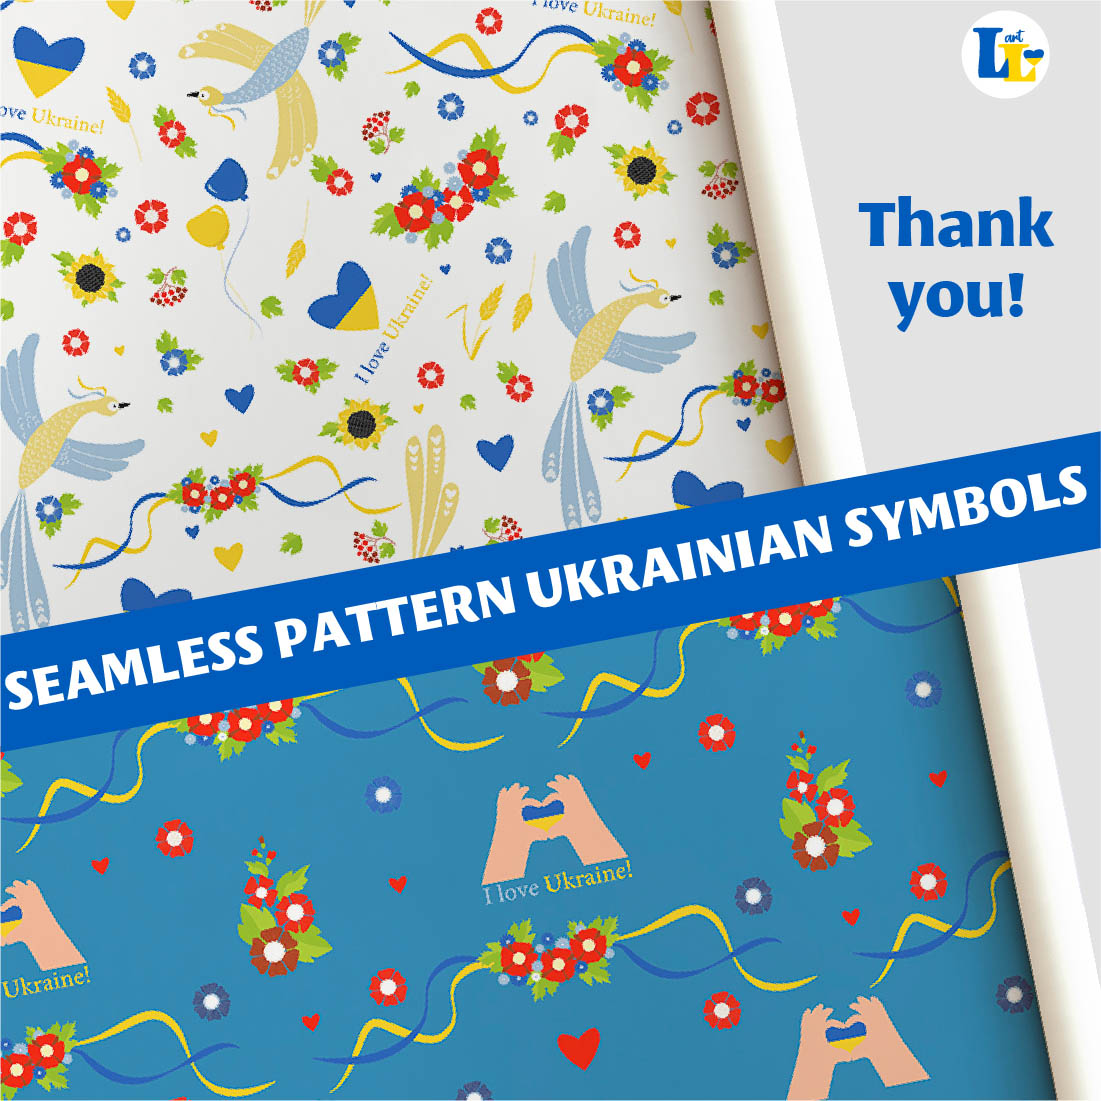 Seamless Pattern with Ukrainian Symbols